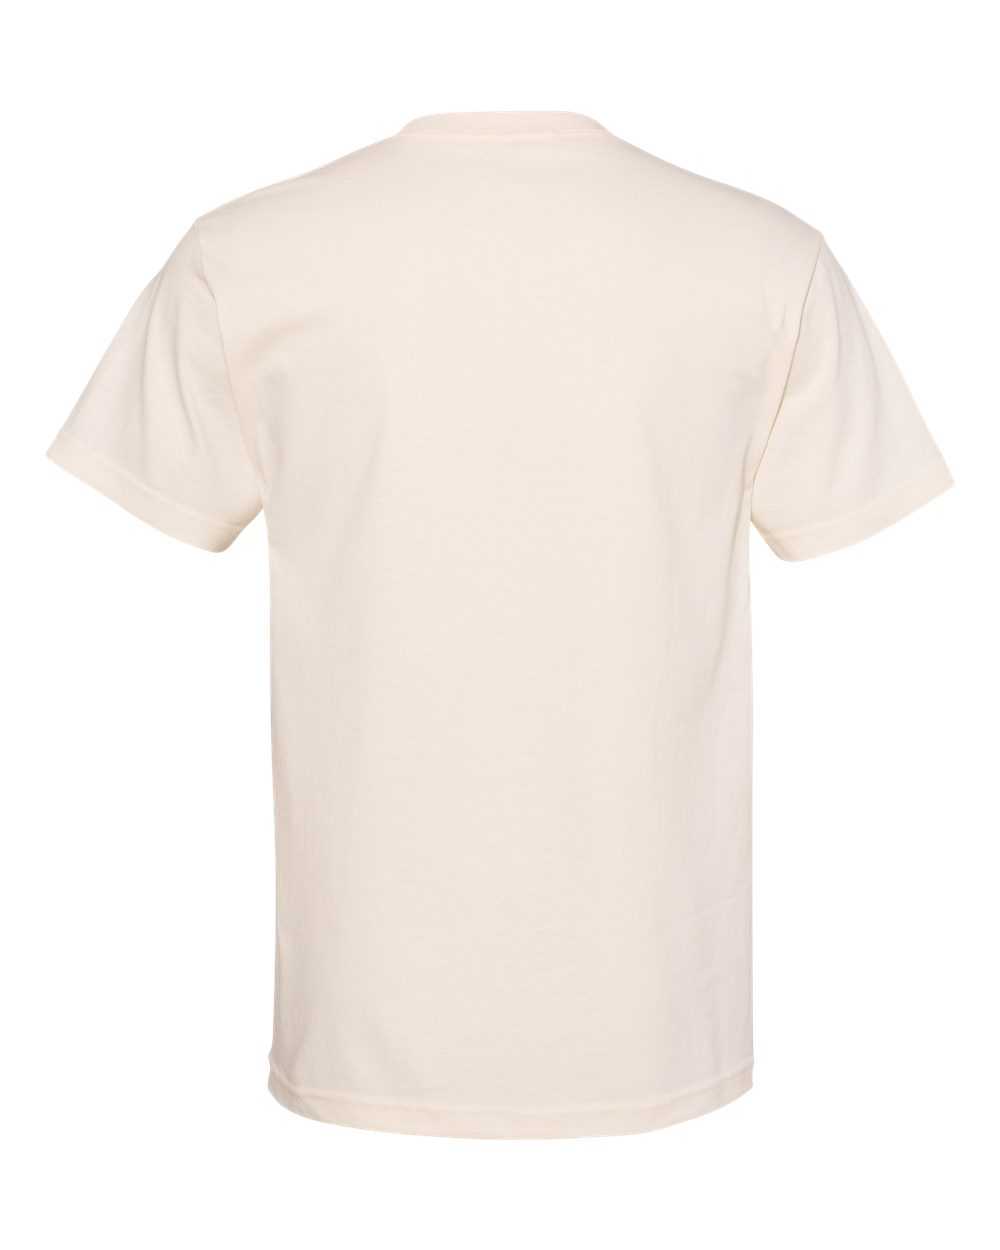 American Apparel 1301 Unisex Heavyweight Cotton T-Shirt - Cream - HIT a Double